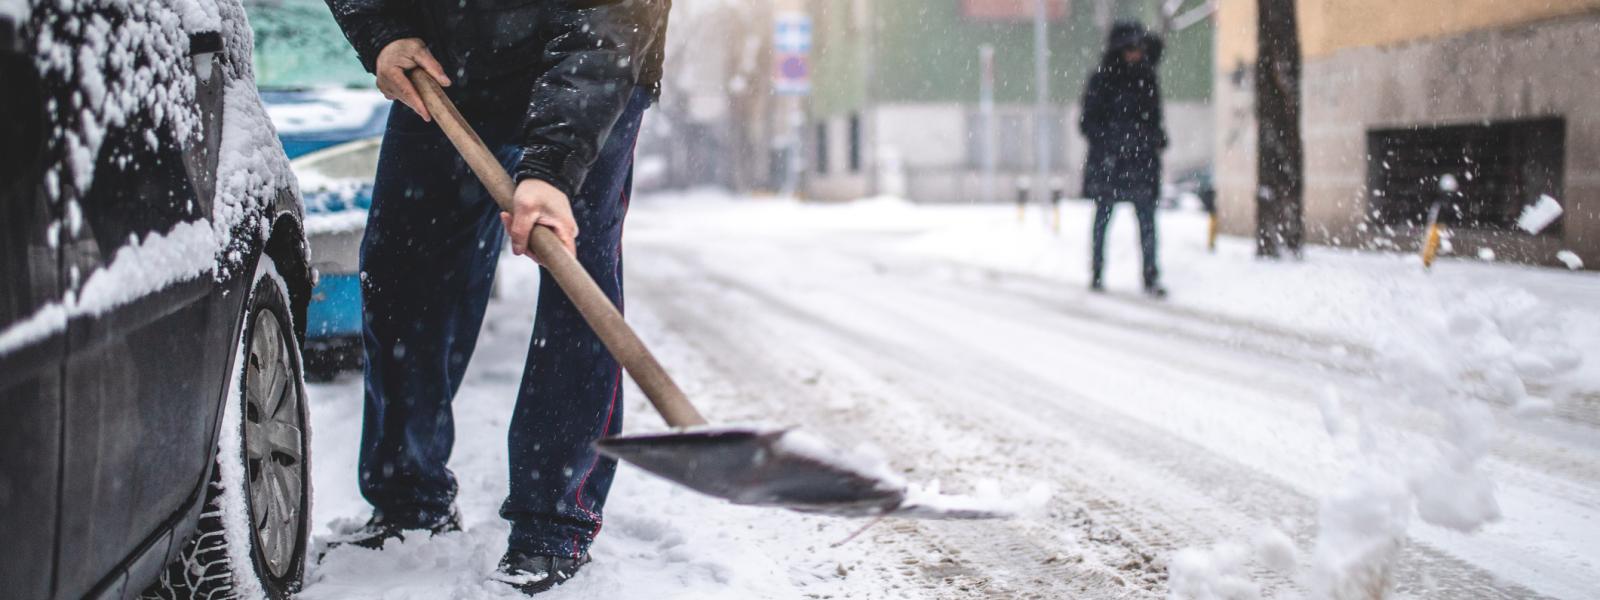 Man shoveling snow in street around cars.